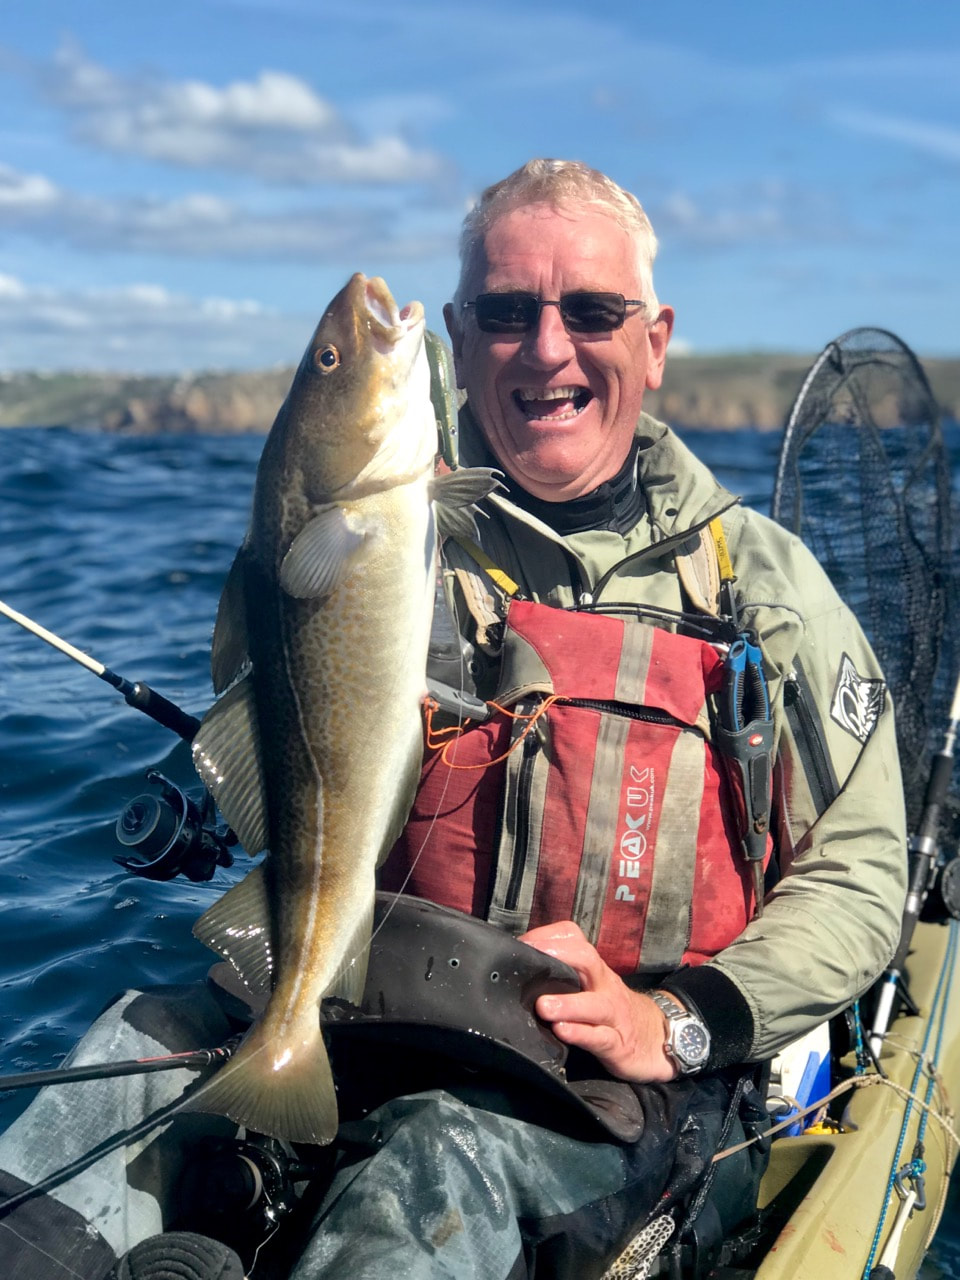 Stu with a nice Cod caught at the Penzance Kayak Fishing Meet